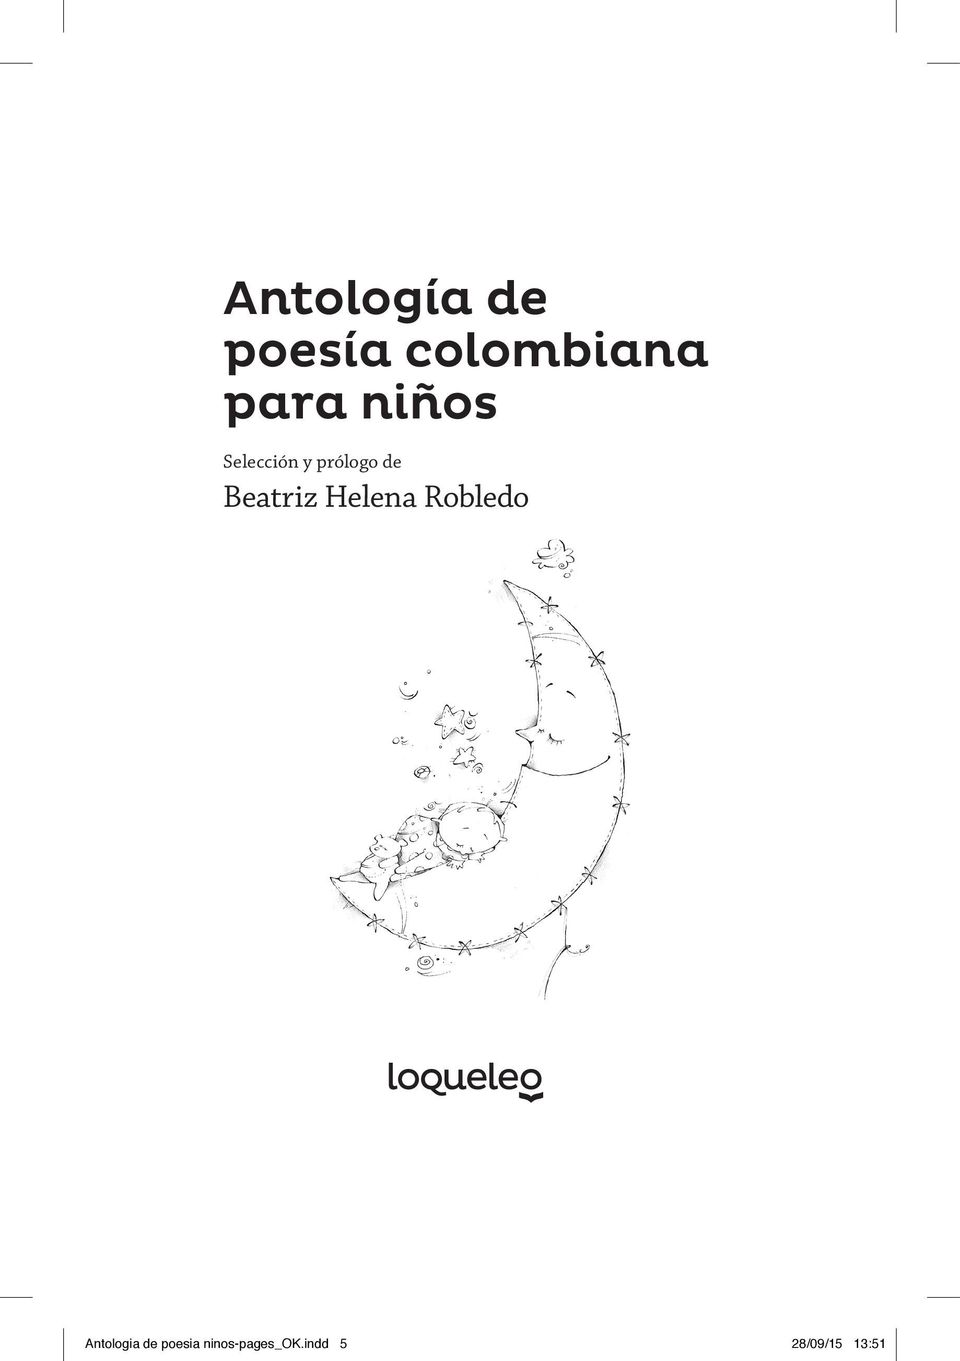 Beatriz Helena Robledo Antologia de